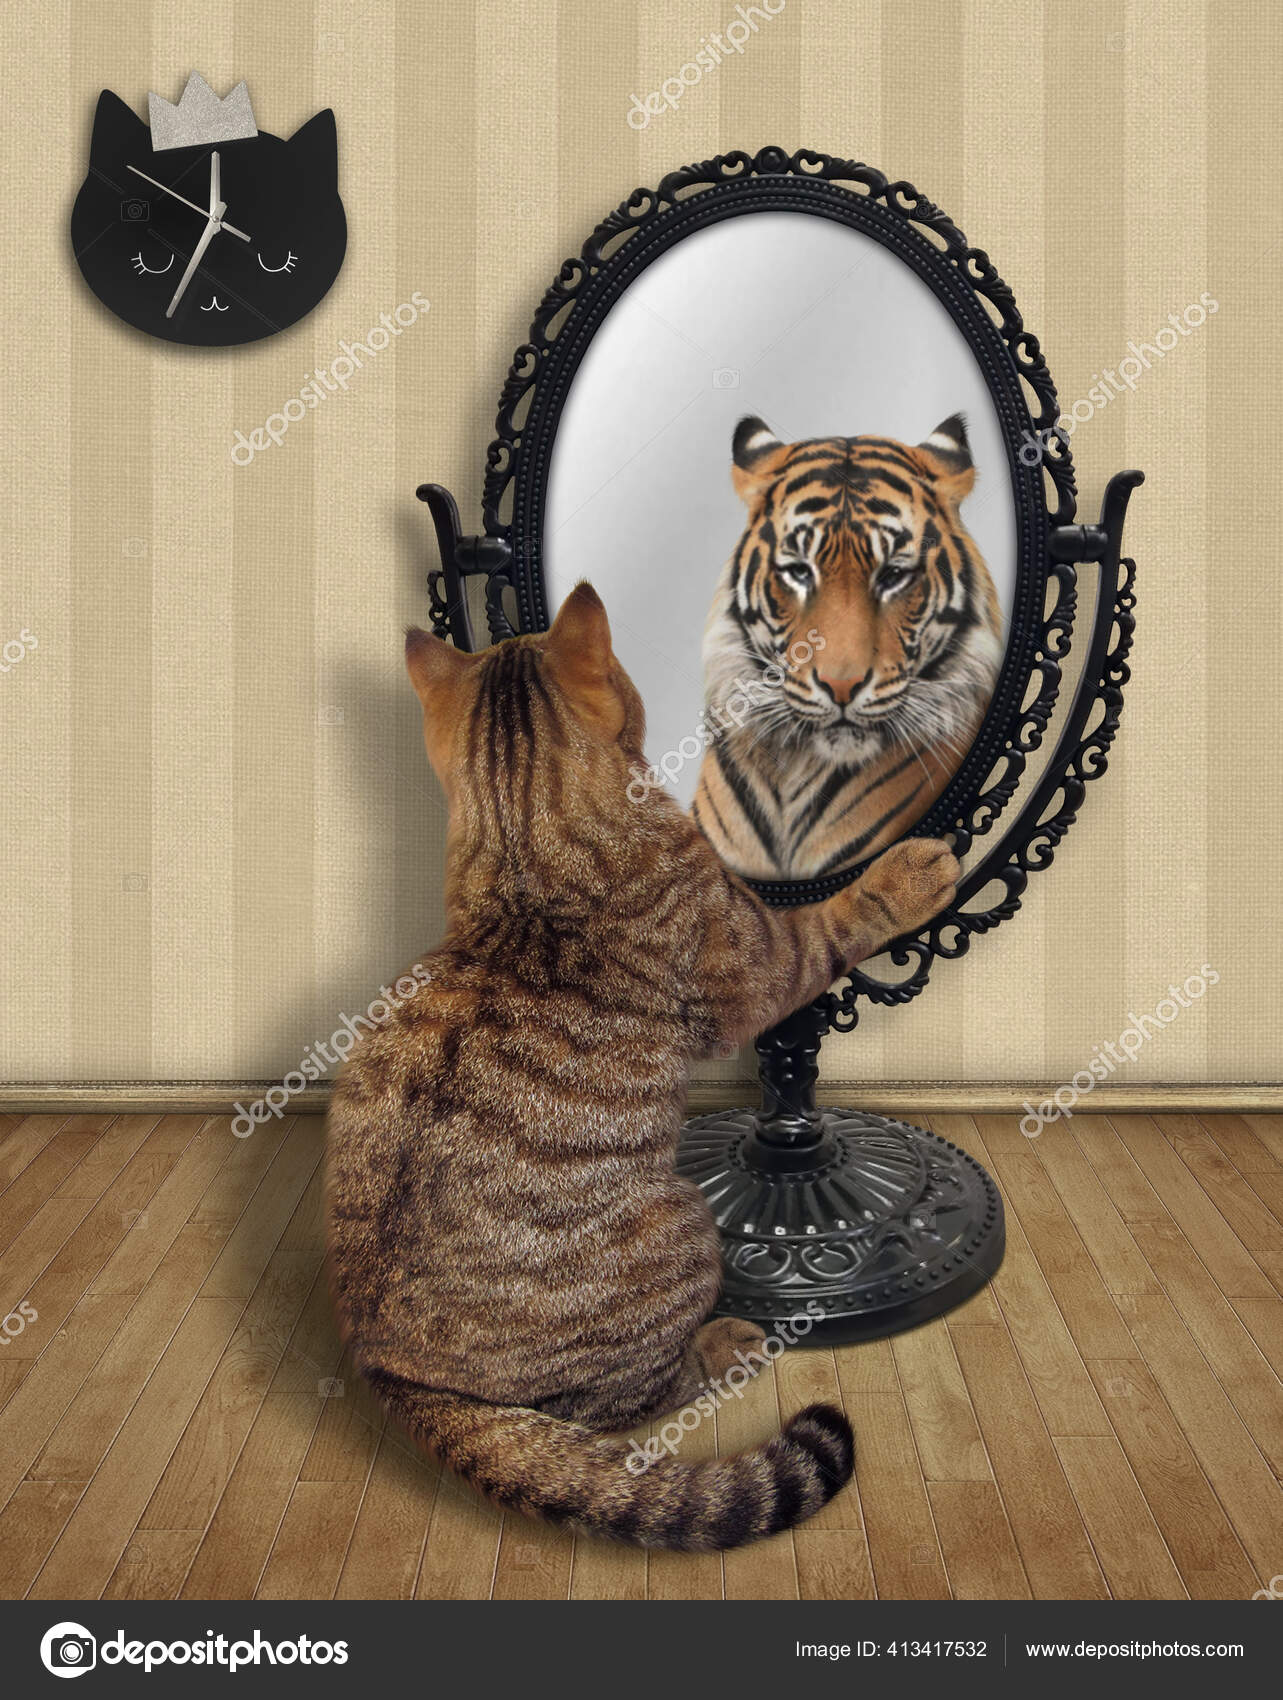 Toevlucht pk Algebraïsch Leeuw kat spiegel Stock Photos, Royalty Free Leeuw kat spiegel Images |  Depositphotos